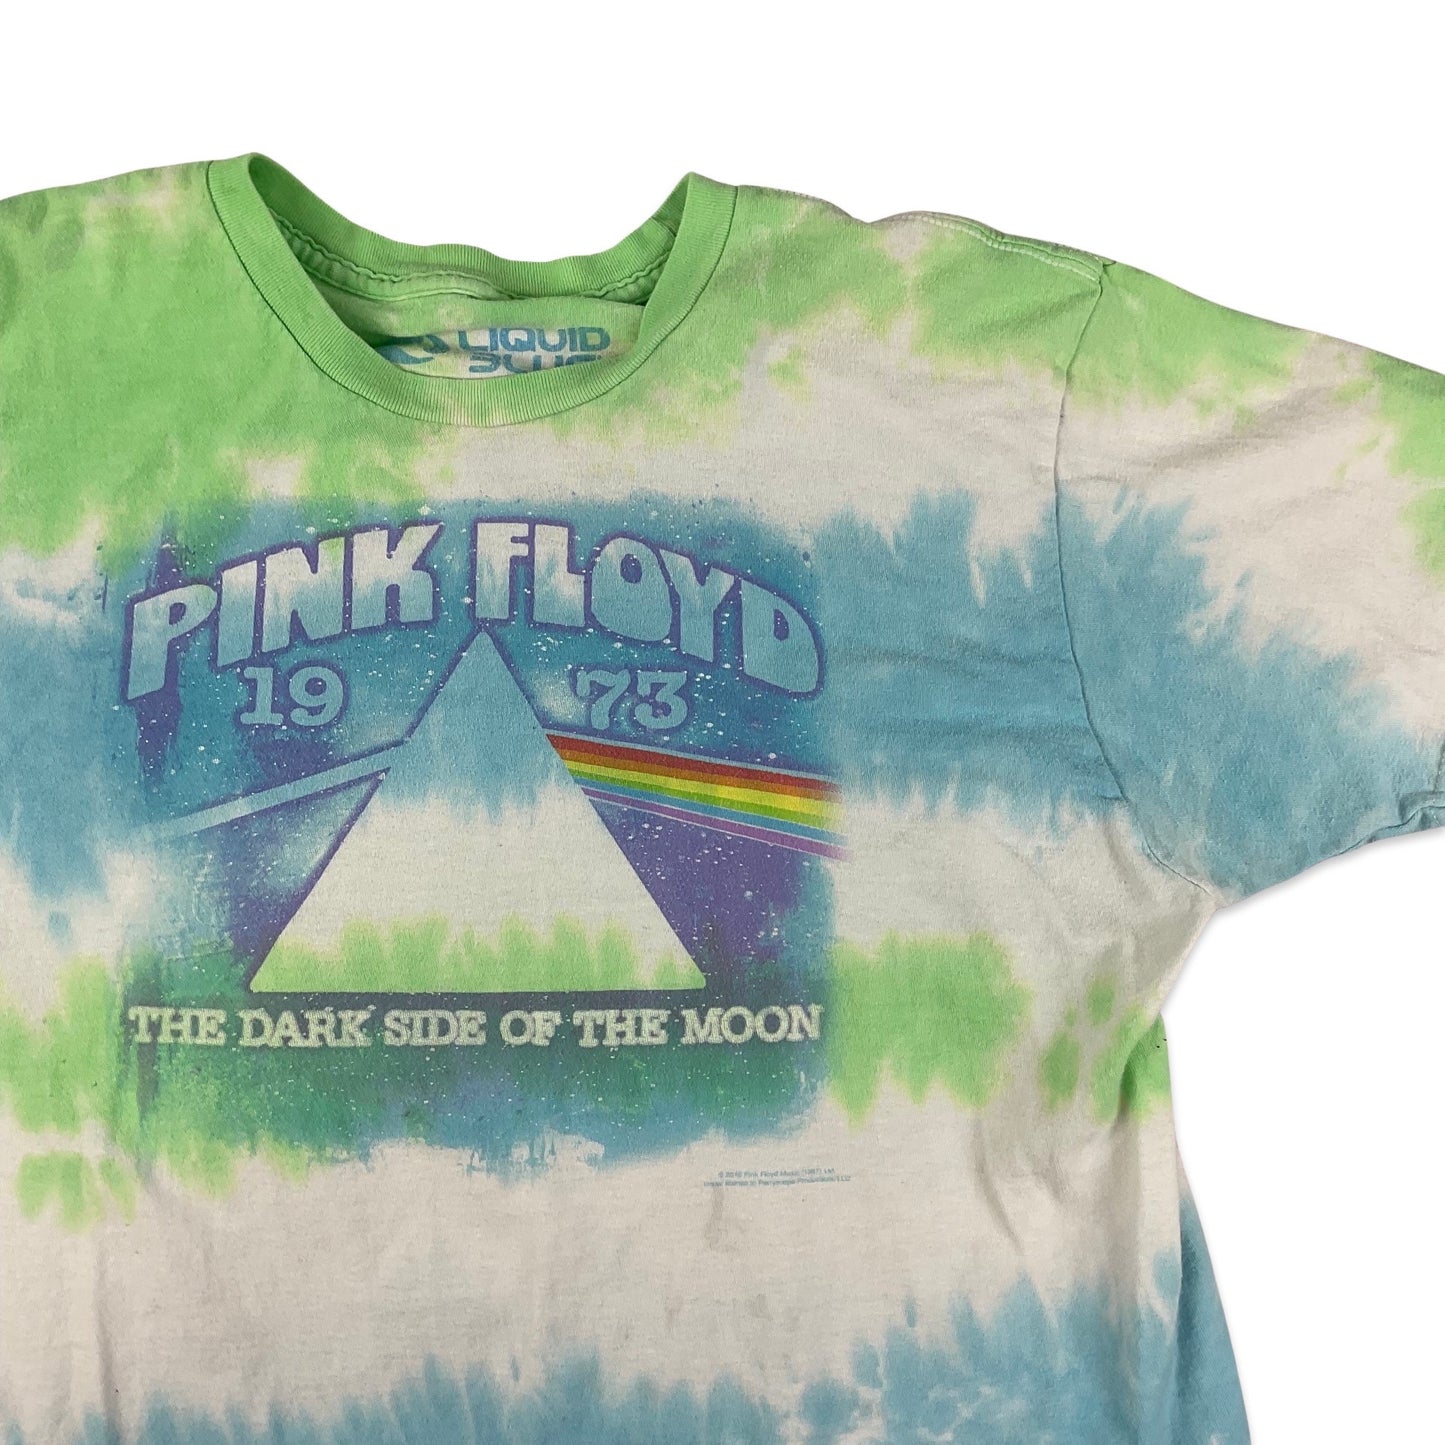 Pink Floyd Tie-Dye Green and Blue Tee S M